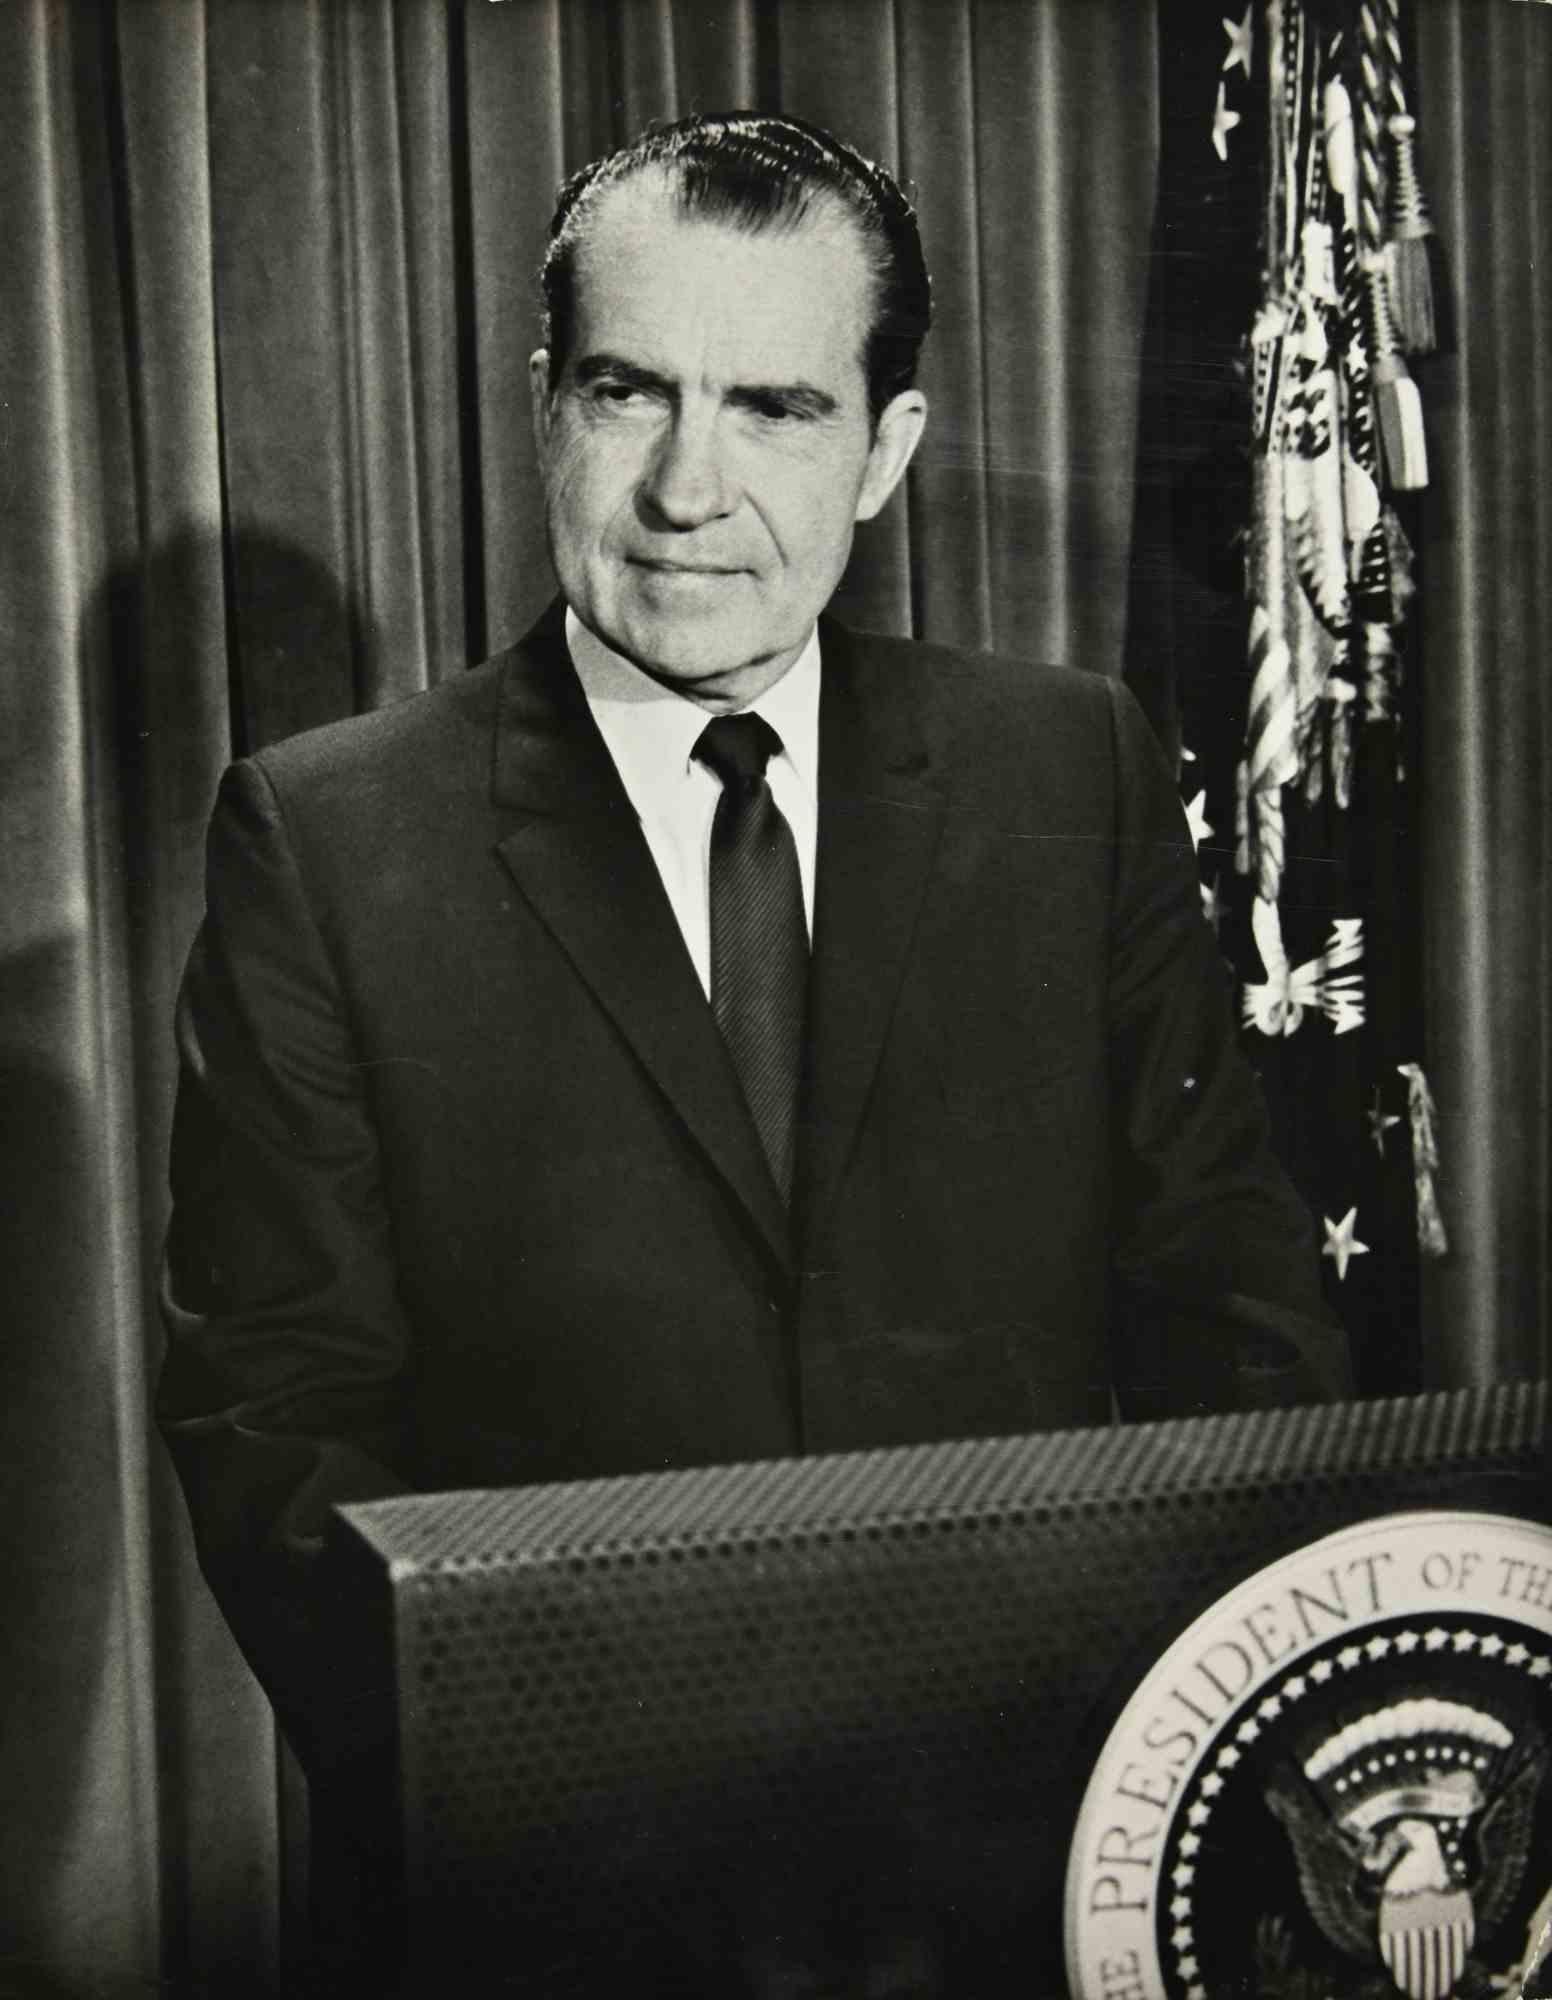 Unknown Black and White Photograph - President Richard Nixon - Vintage Photo - 1970s